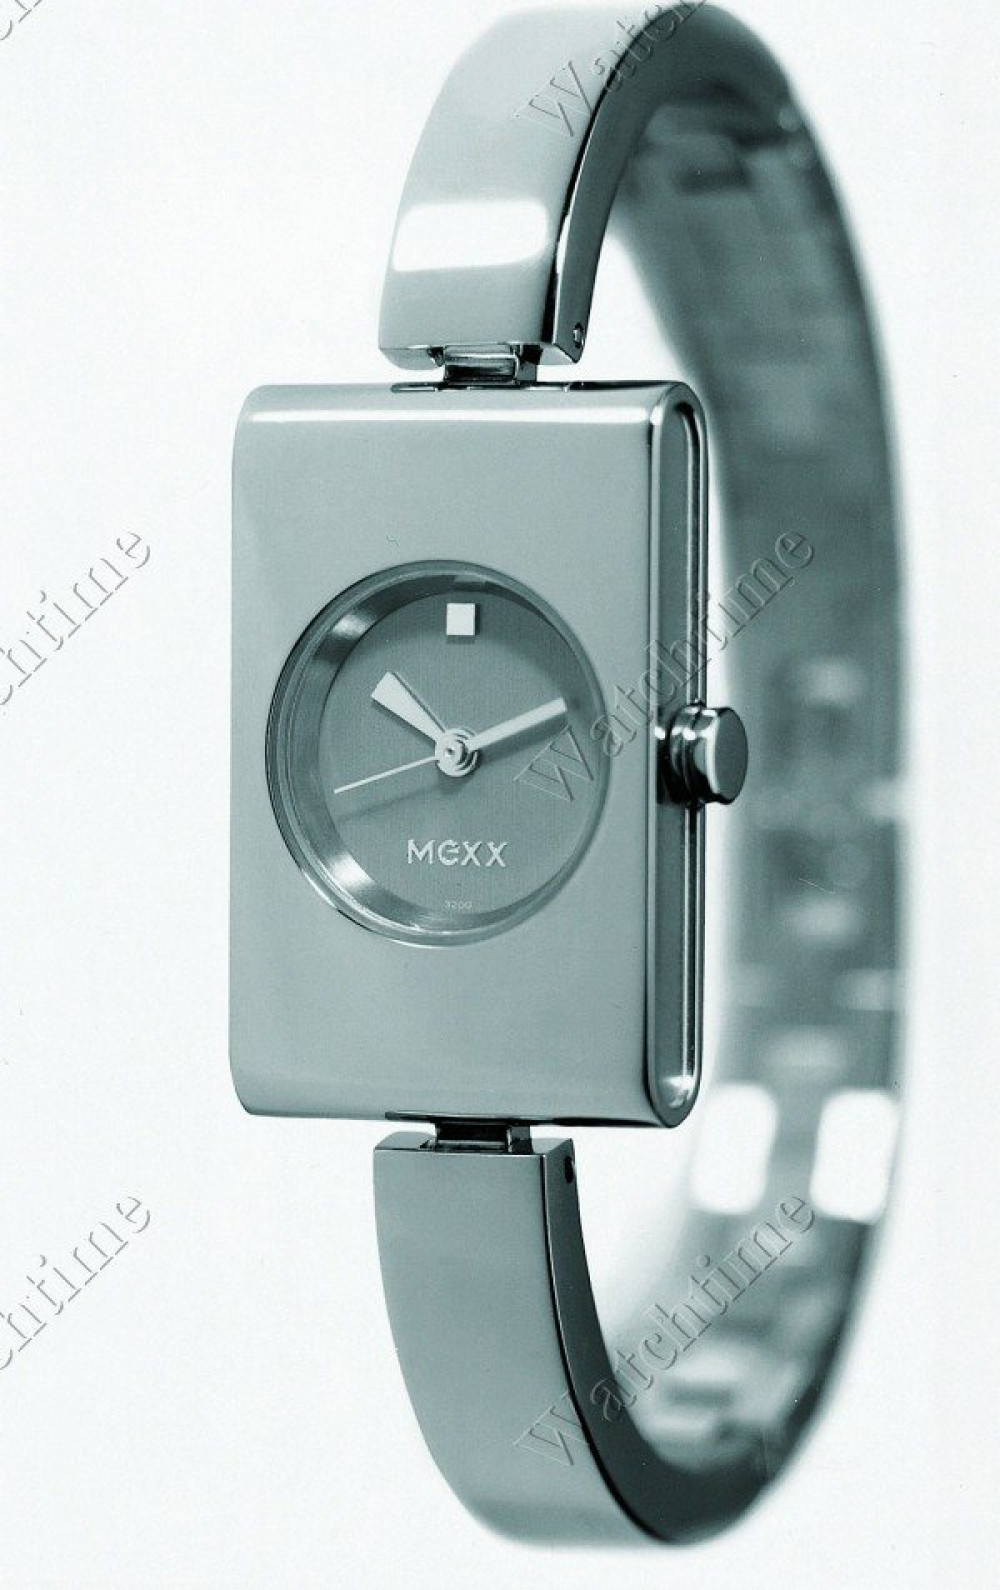 Zegarek firmy Mexx Time, model Intensity